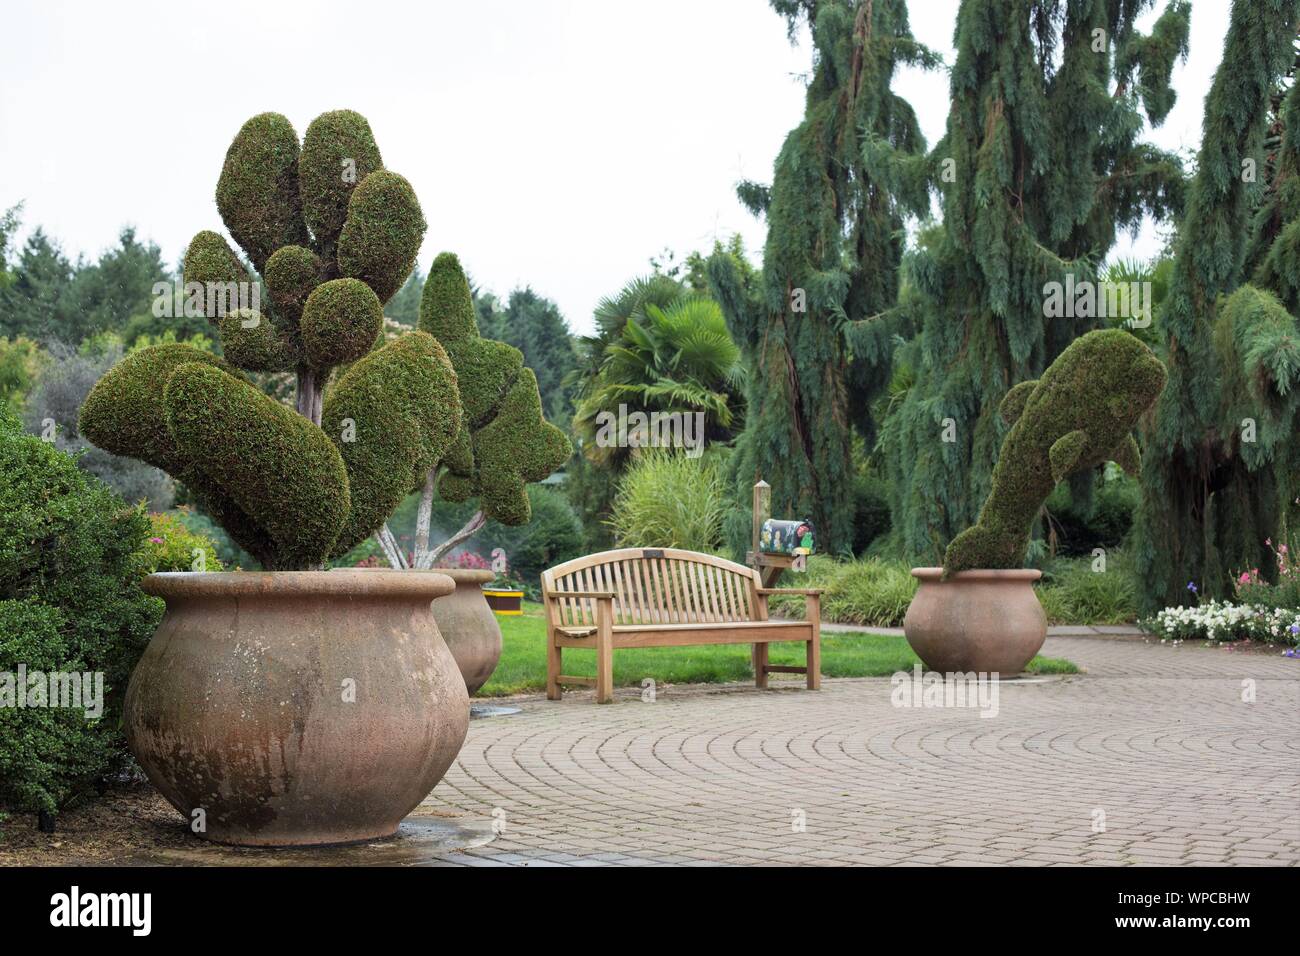 Whimsical shrubs in the Children's Garden at the Oregon Garden in Silverton, OR, USA. Stock Photo